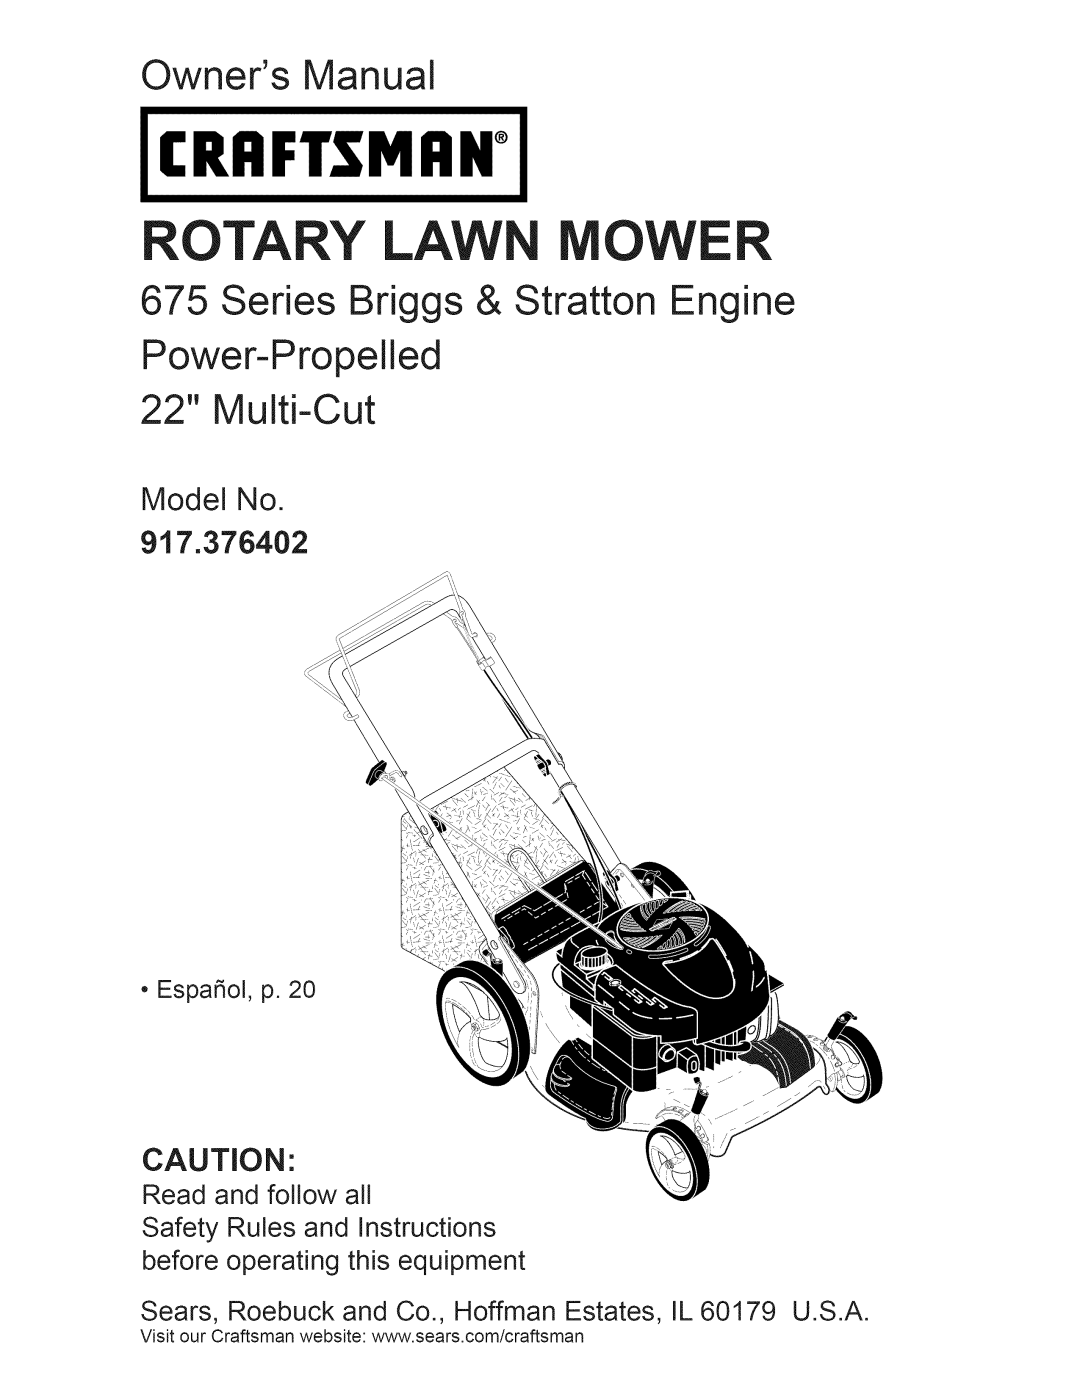 Craftsman owner manual Model No 917.376402, Craftsman, Rotary Lawn Mower, Series Briggs & Stratton Engine 